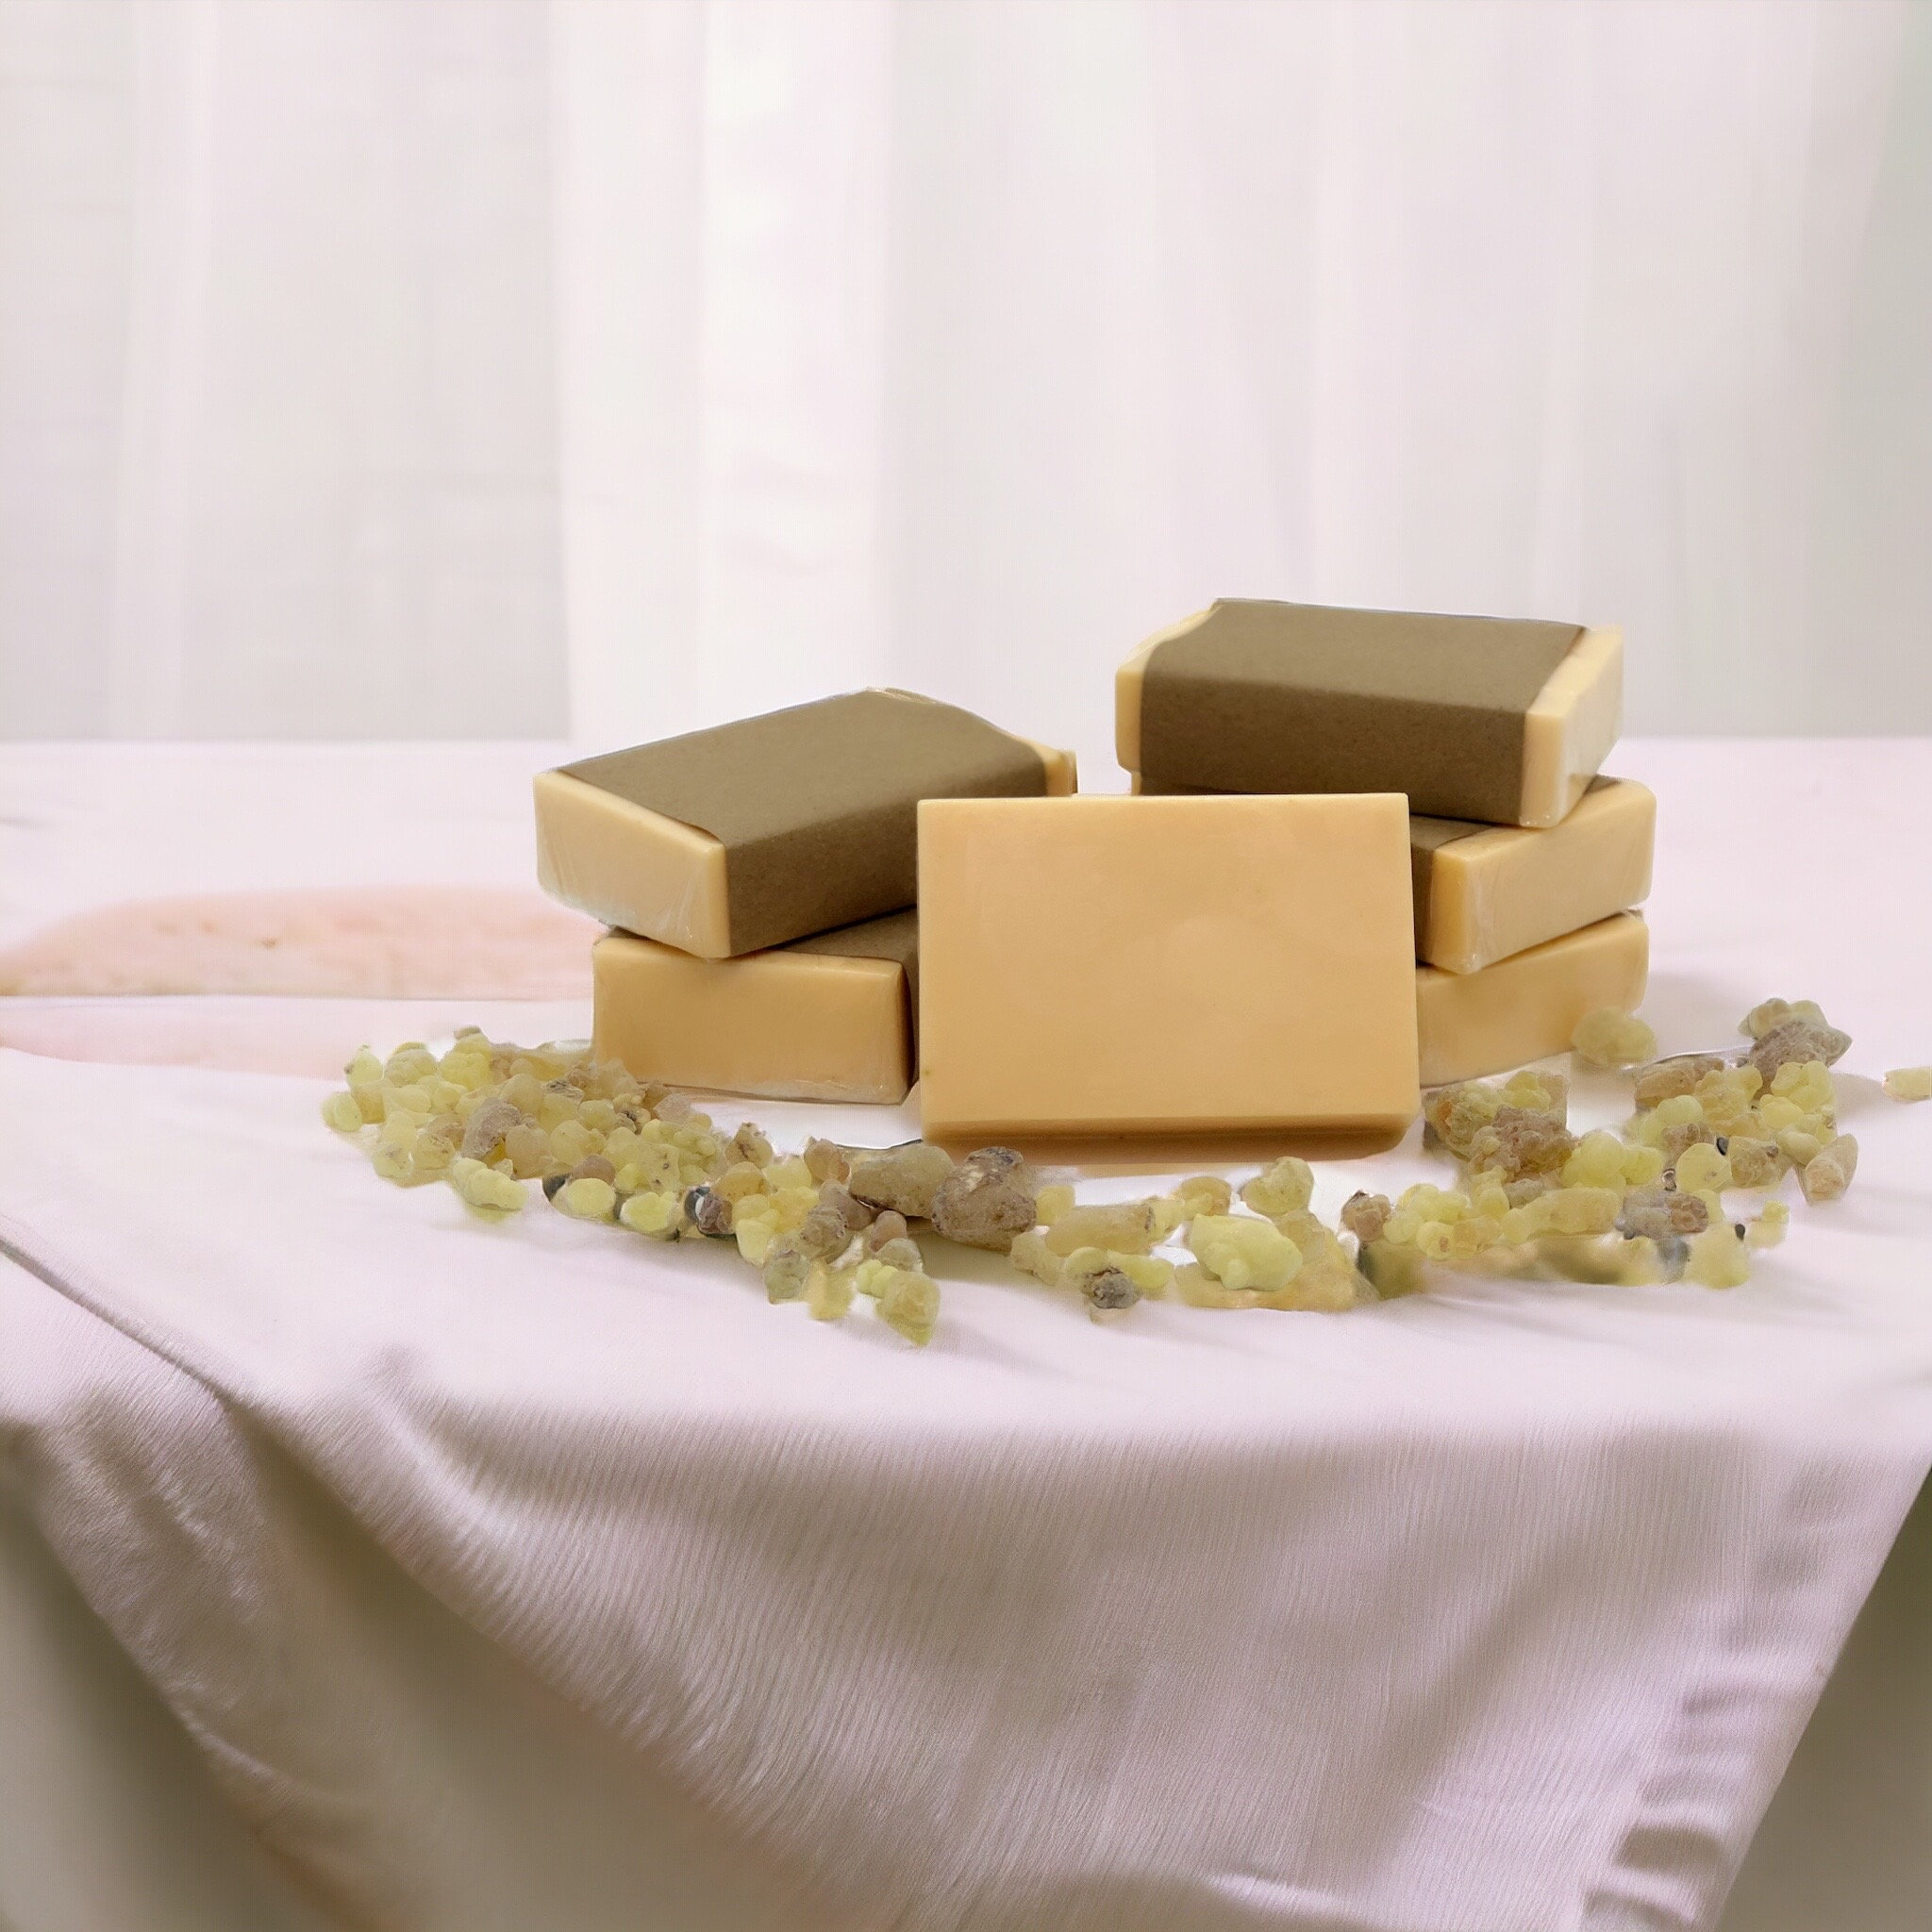 Herbaria Frankincense & Myrrh Soap - All Natural - Handmade